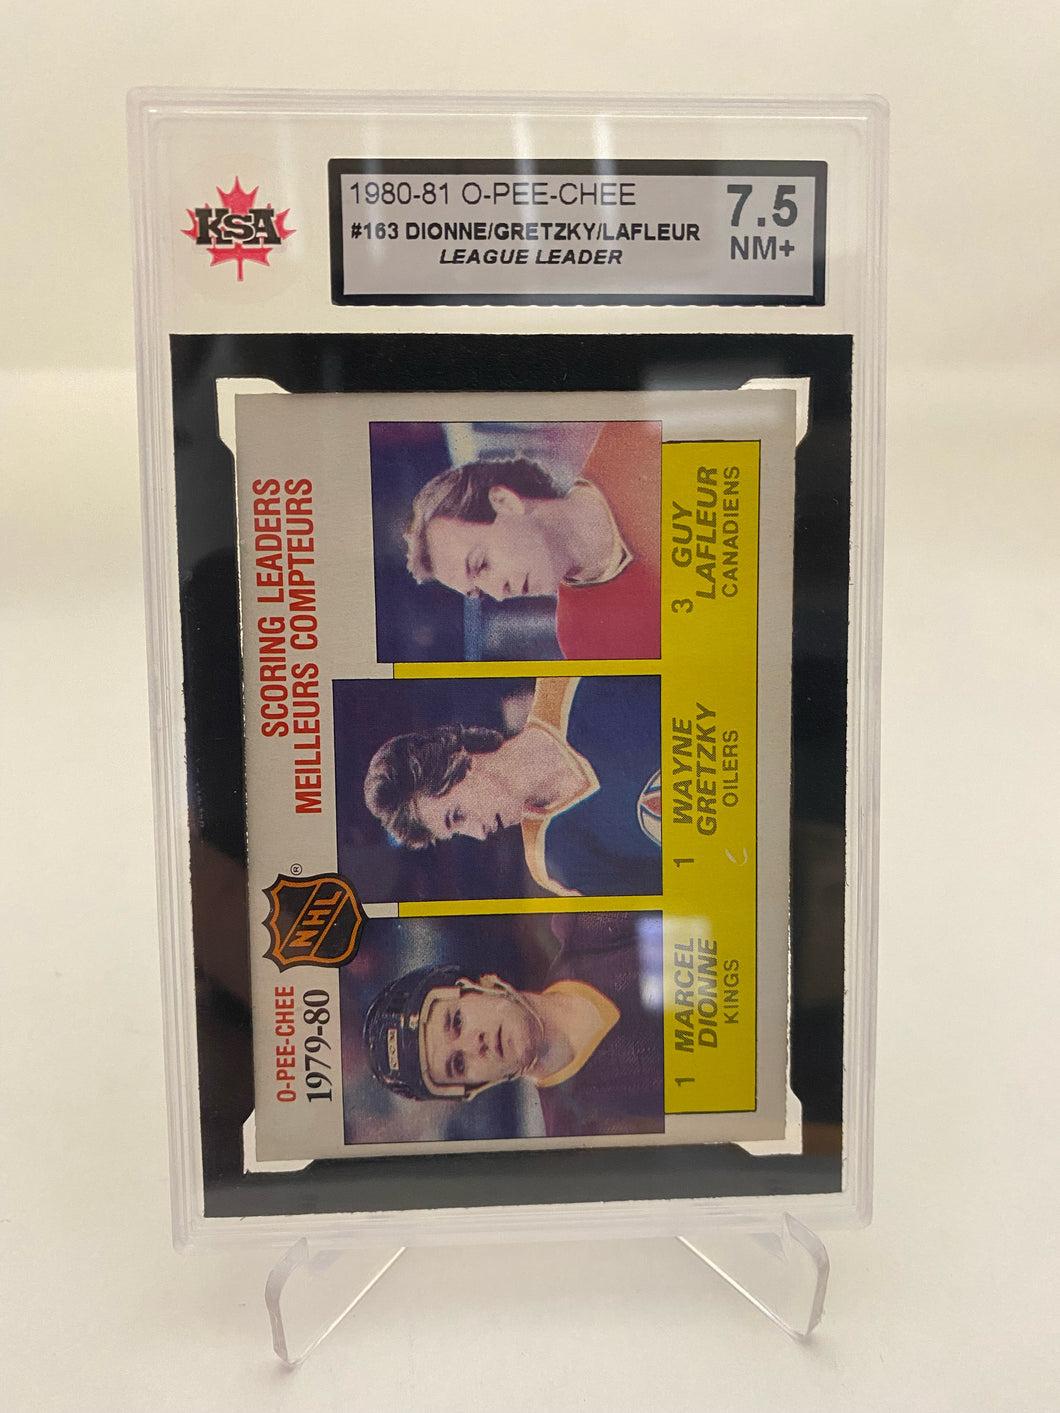 1980-81 O-Pee-Chee #163 Dionne/Gretzky/Lafleur League Leader KSA 7.5